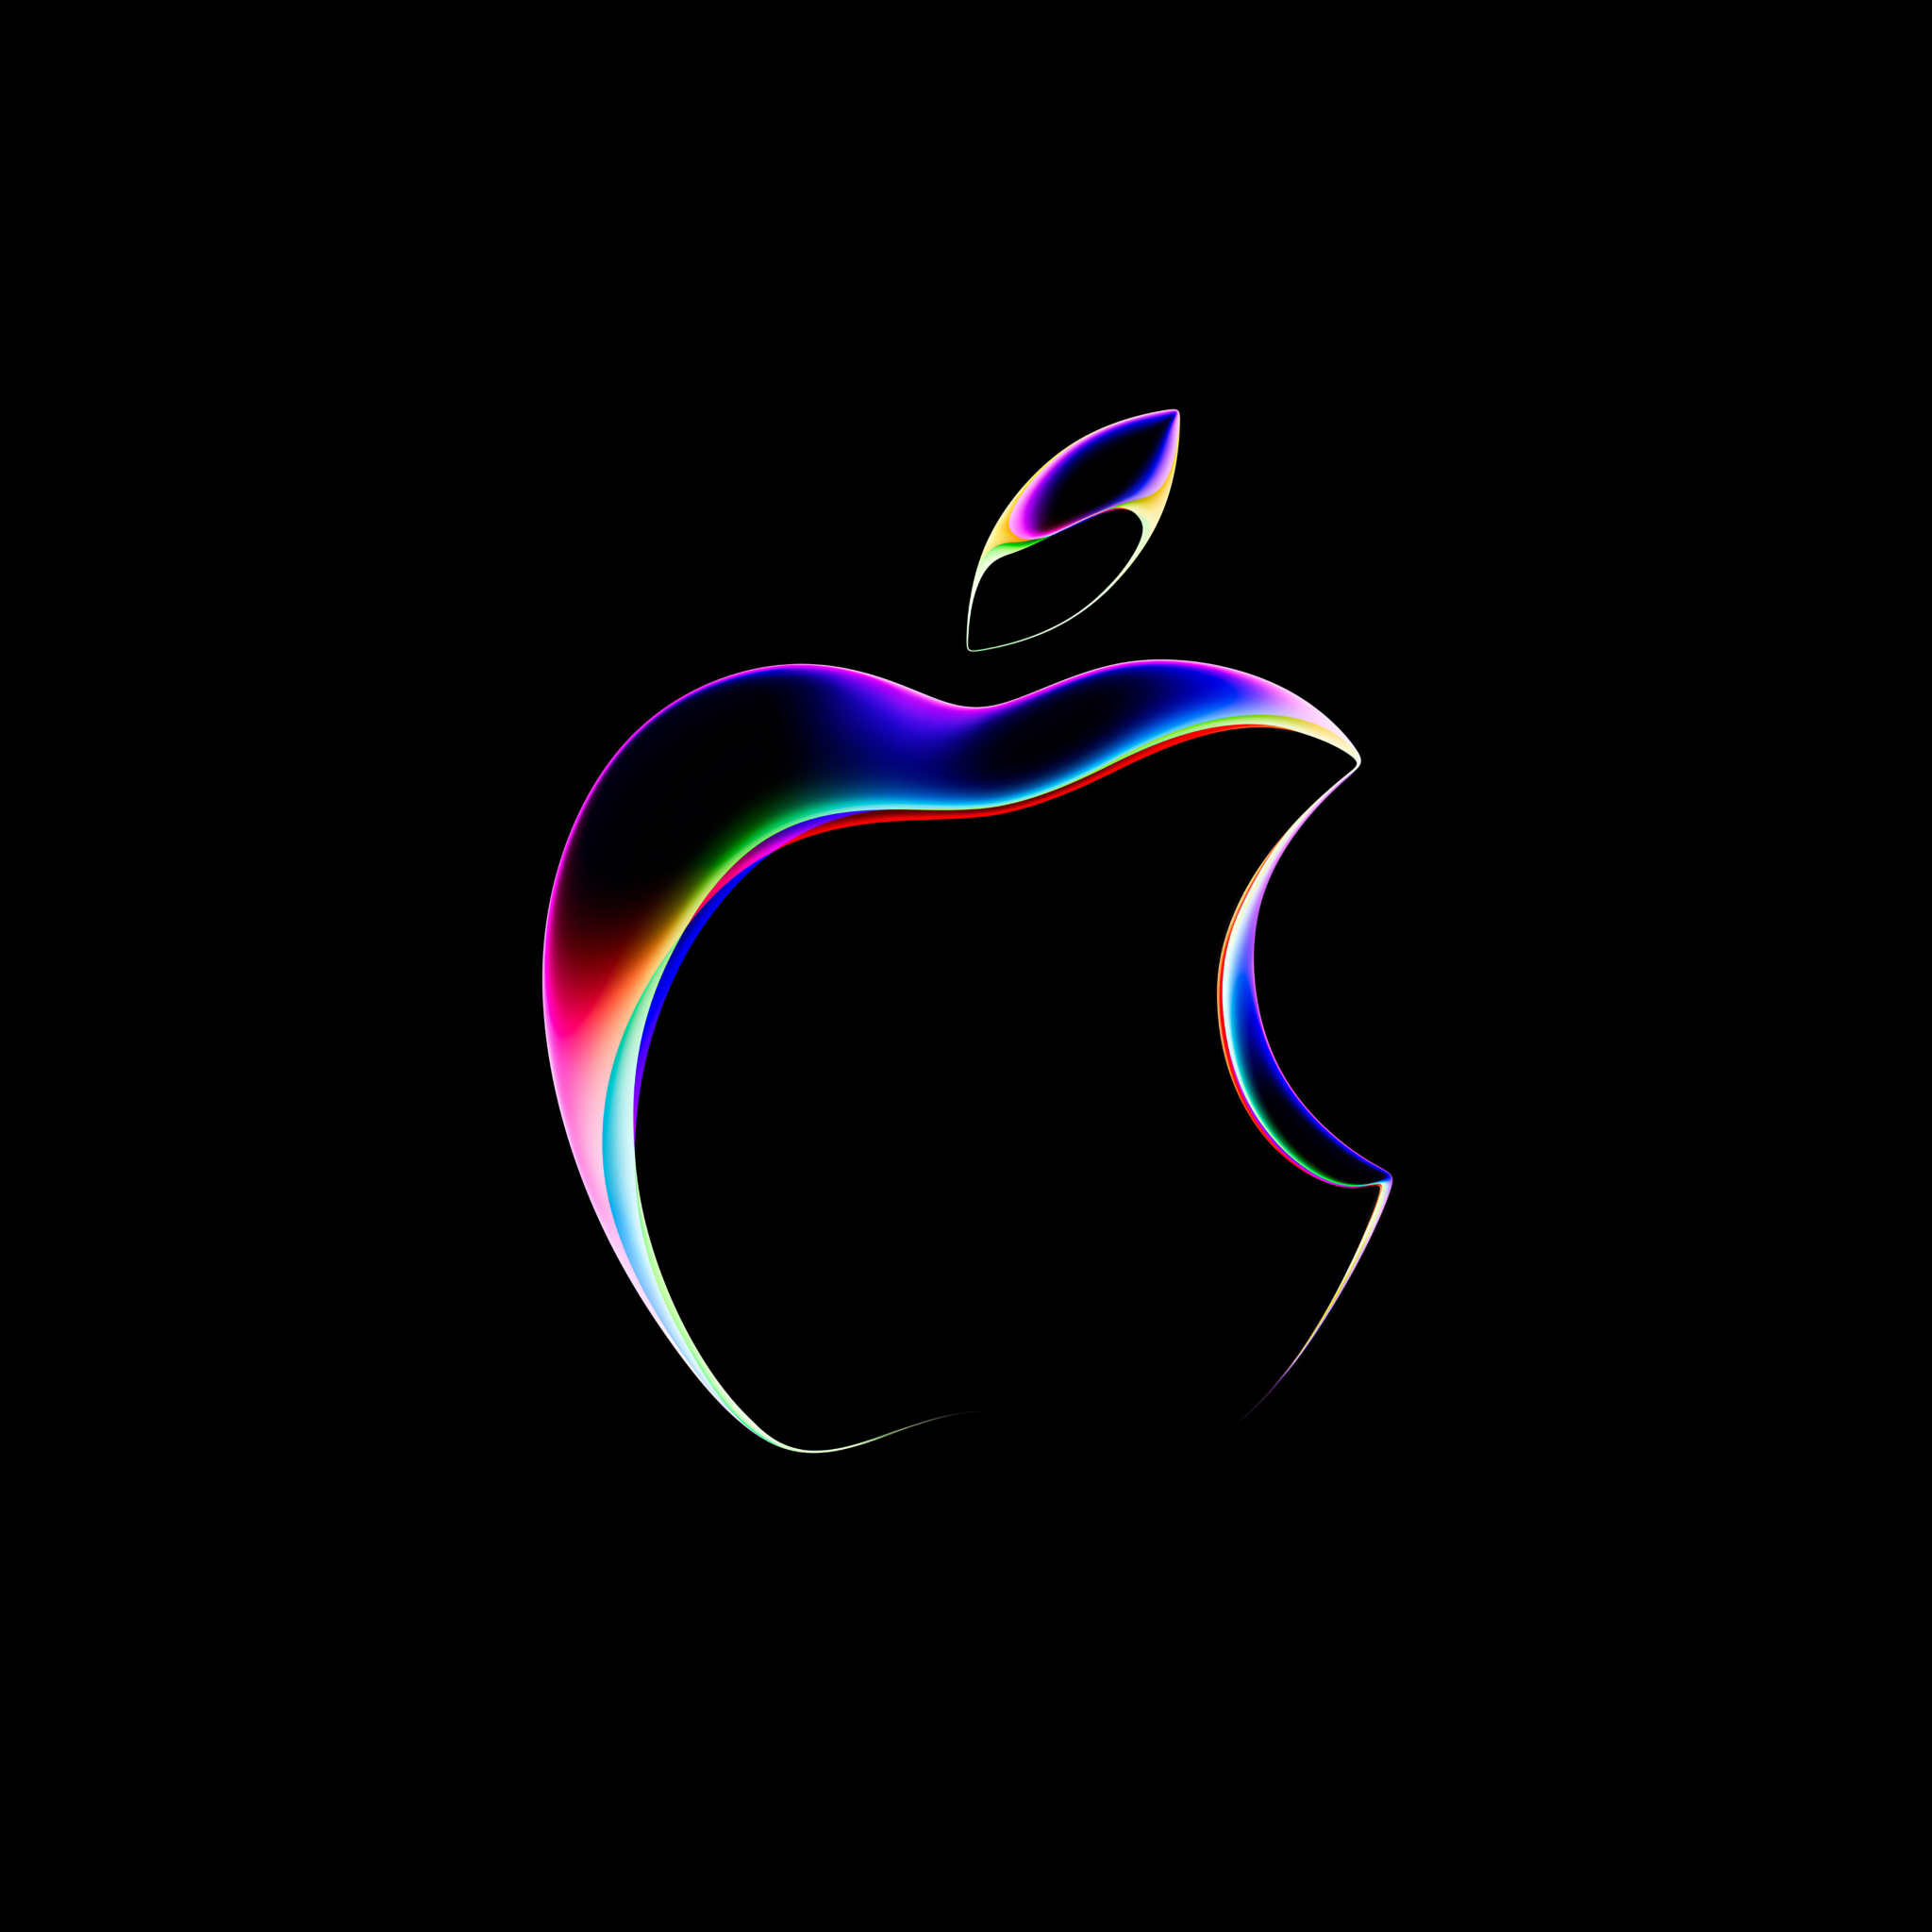 Apple Logo Wallpaper Download | MobCup